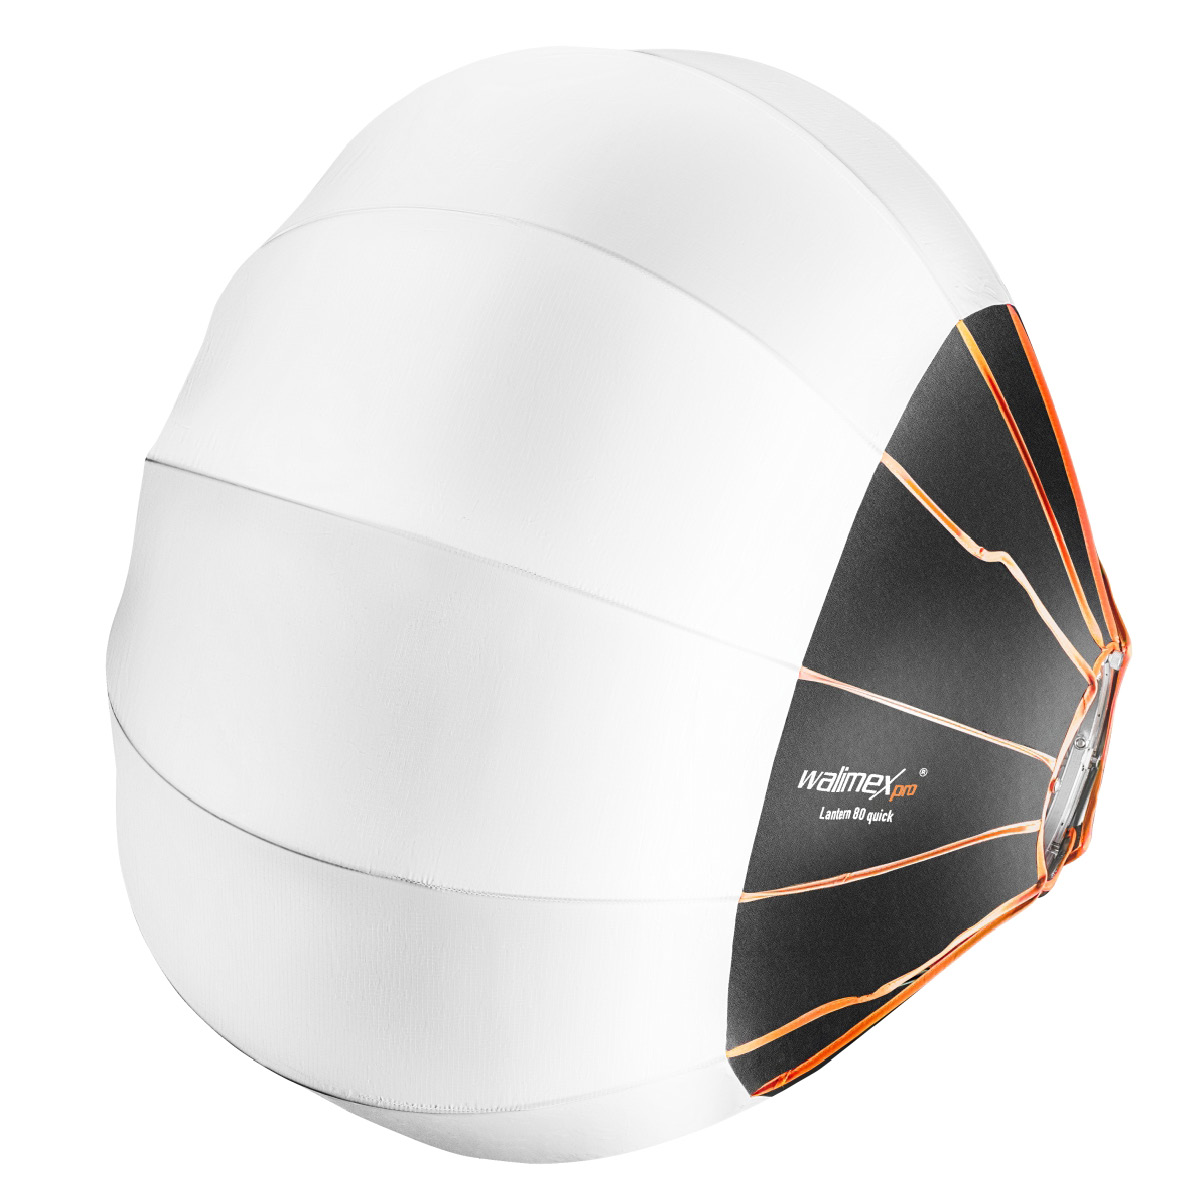 Walimex pro 360° Ambient Light Softbox 80 Walimex Pro&K